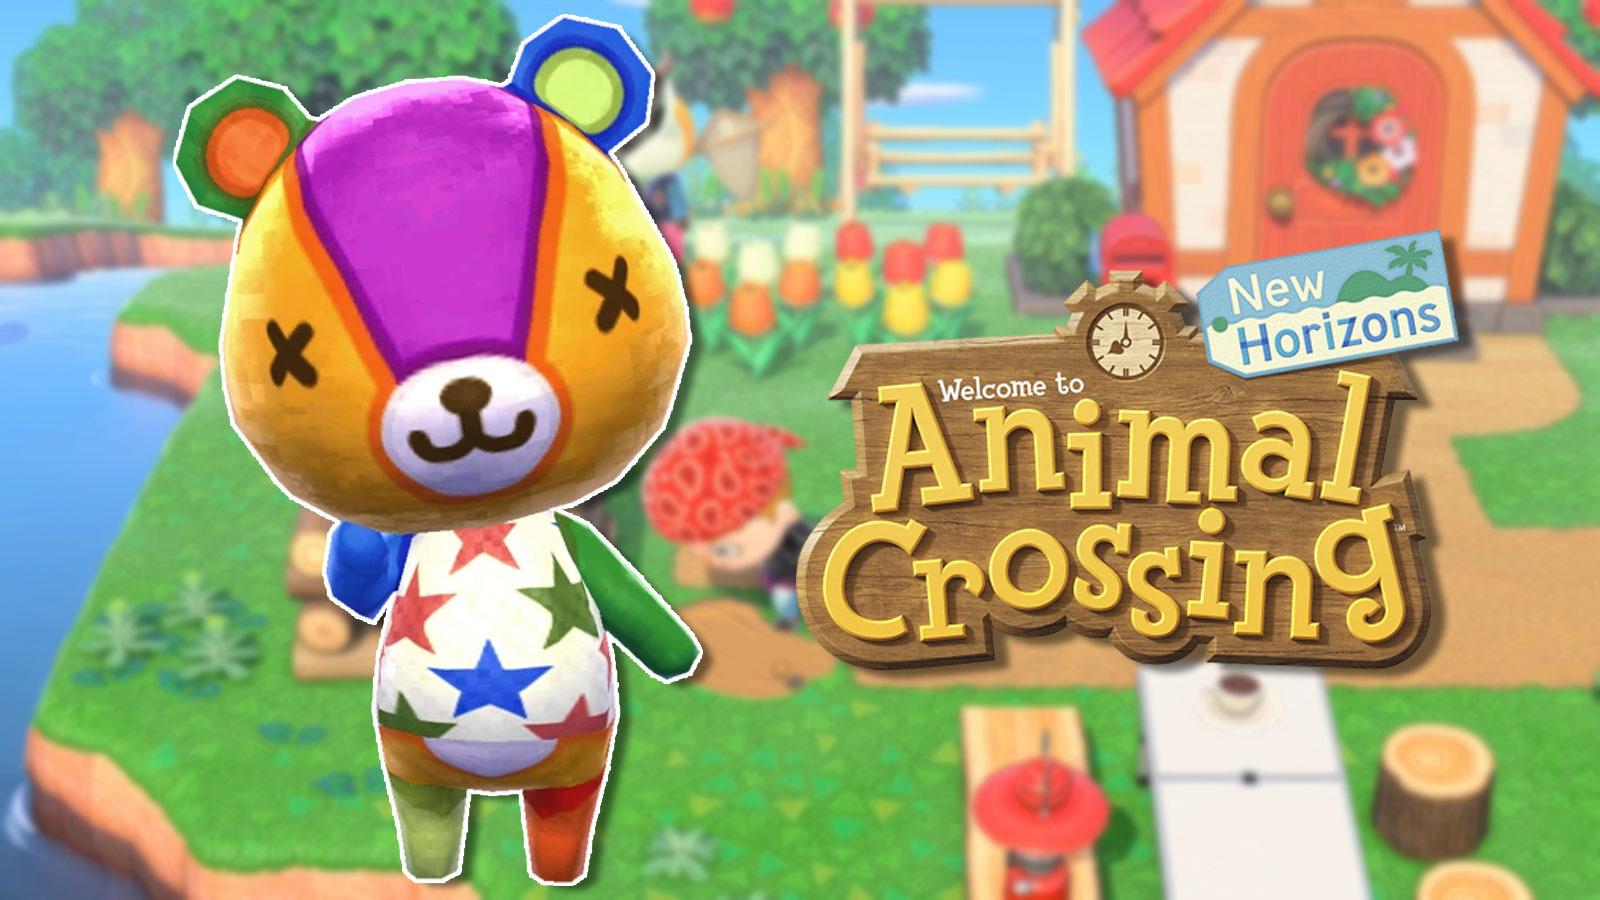 Animal Crossing New Horizons Stitches